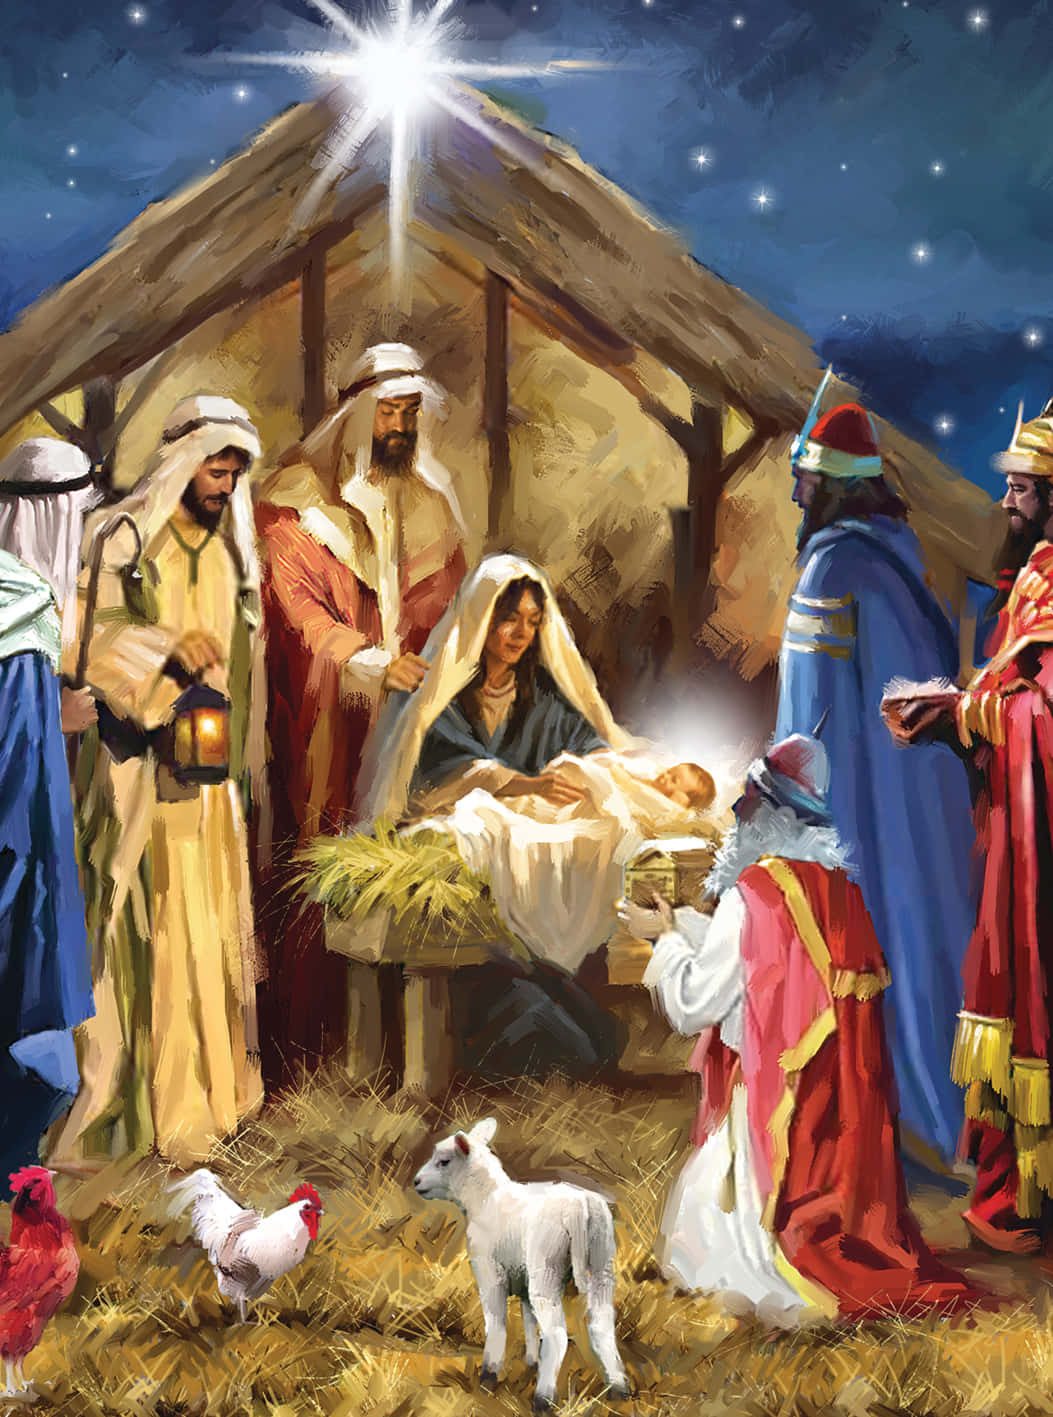 The Nativity Scene on Christmas Day